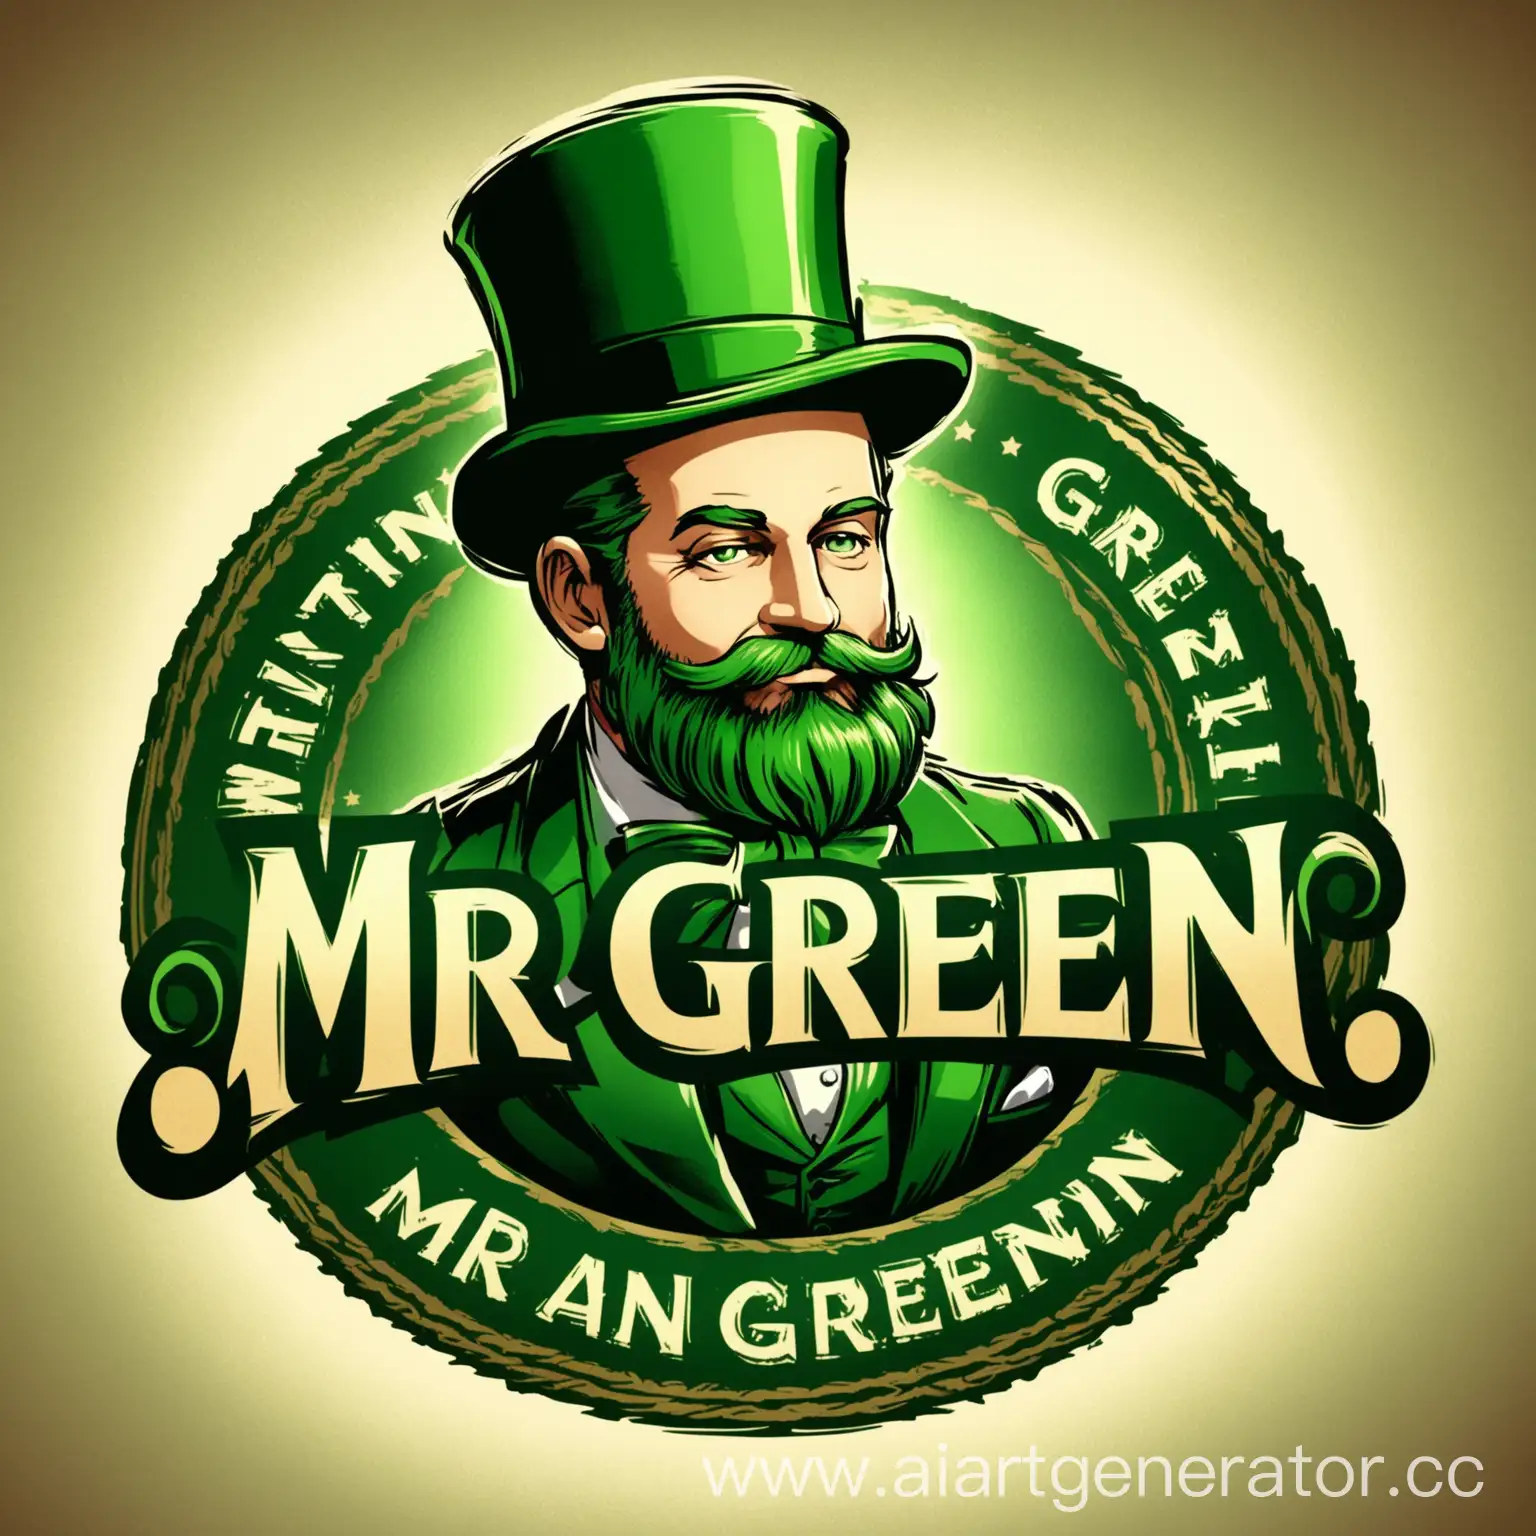 Vintage-Gentleman-Mr-Green-Logo-in-1940s-Suit-and-Top-Hat-with-Beard